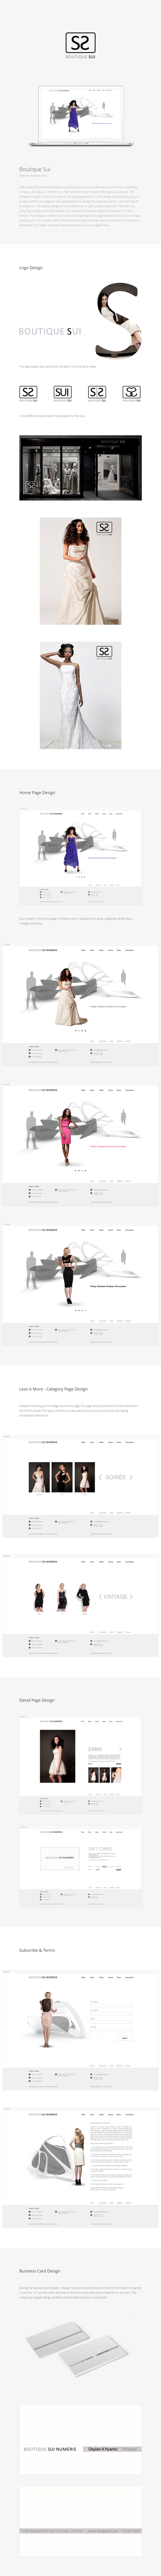 UI boutique women dress Website minimalist clean futuristic